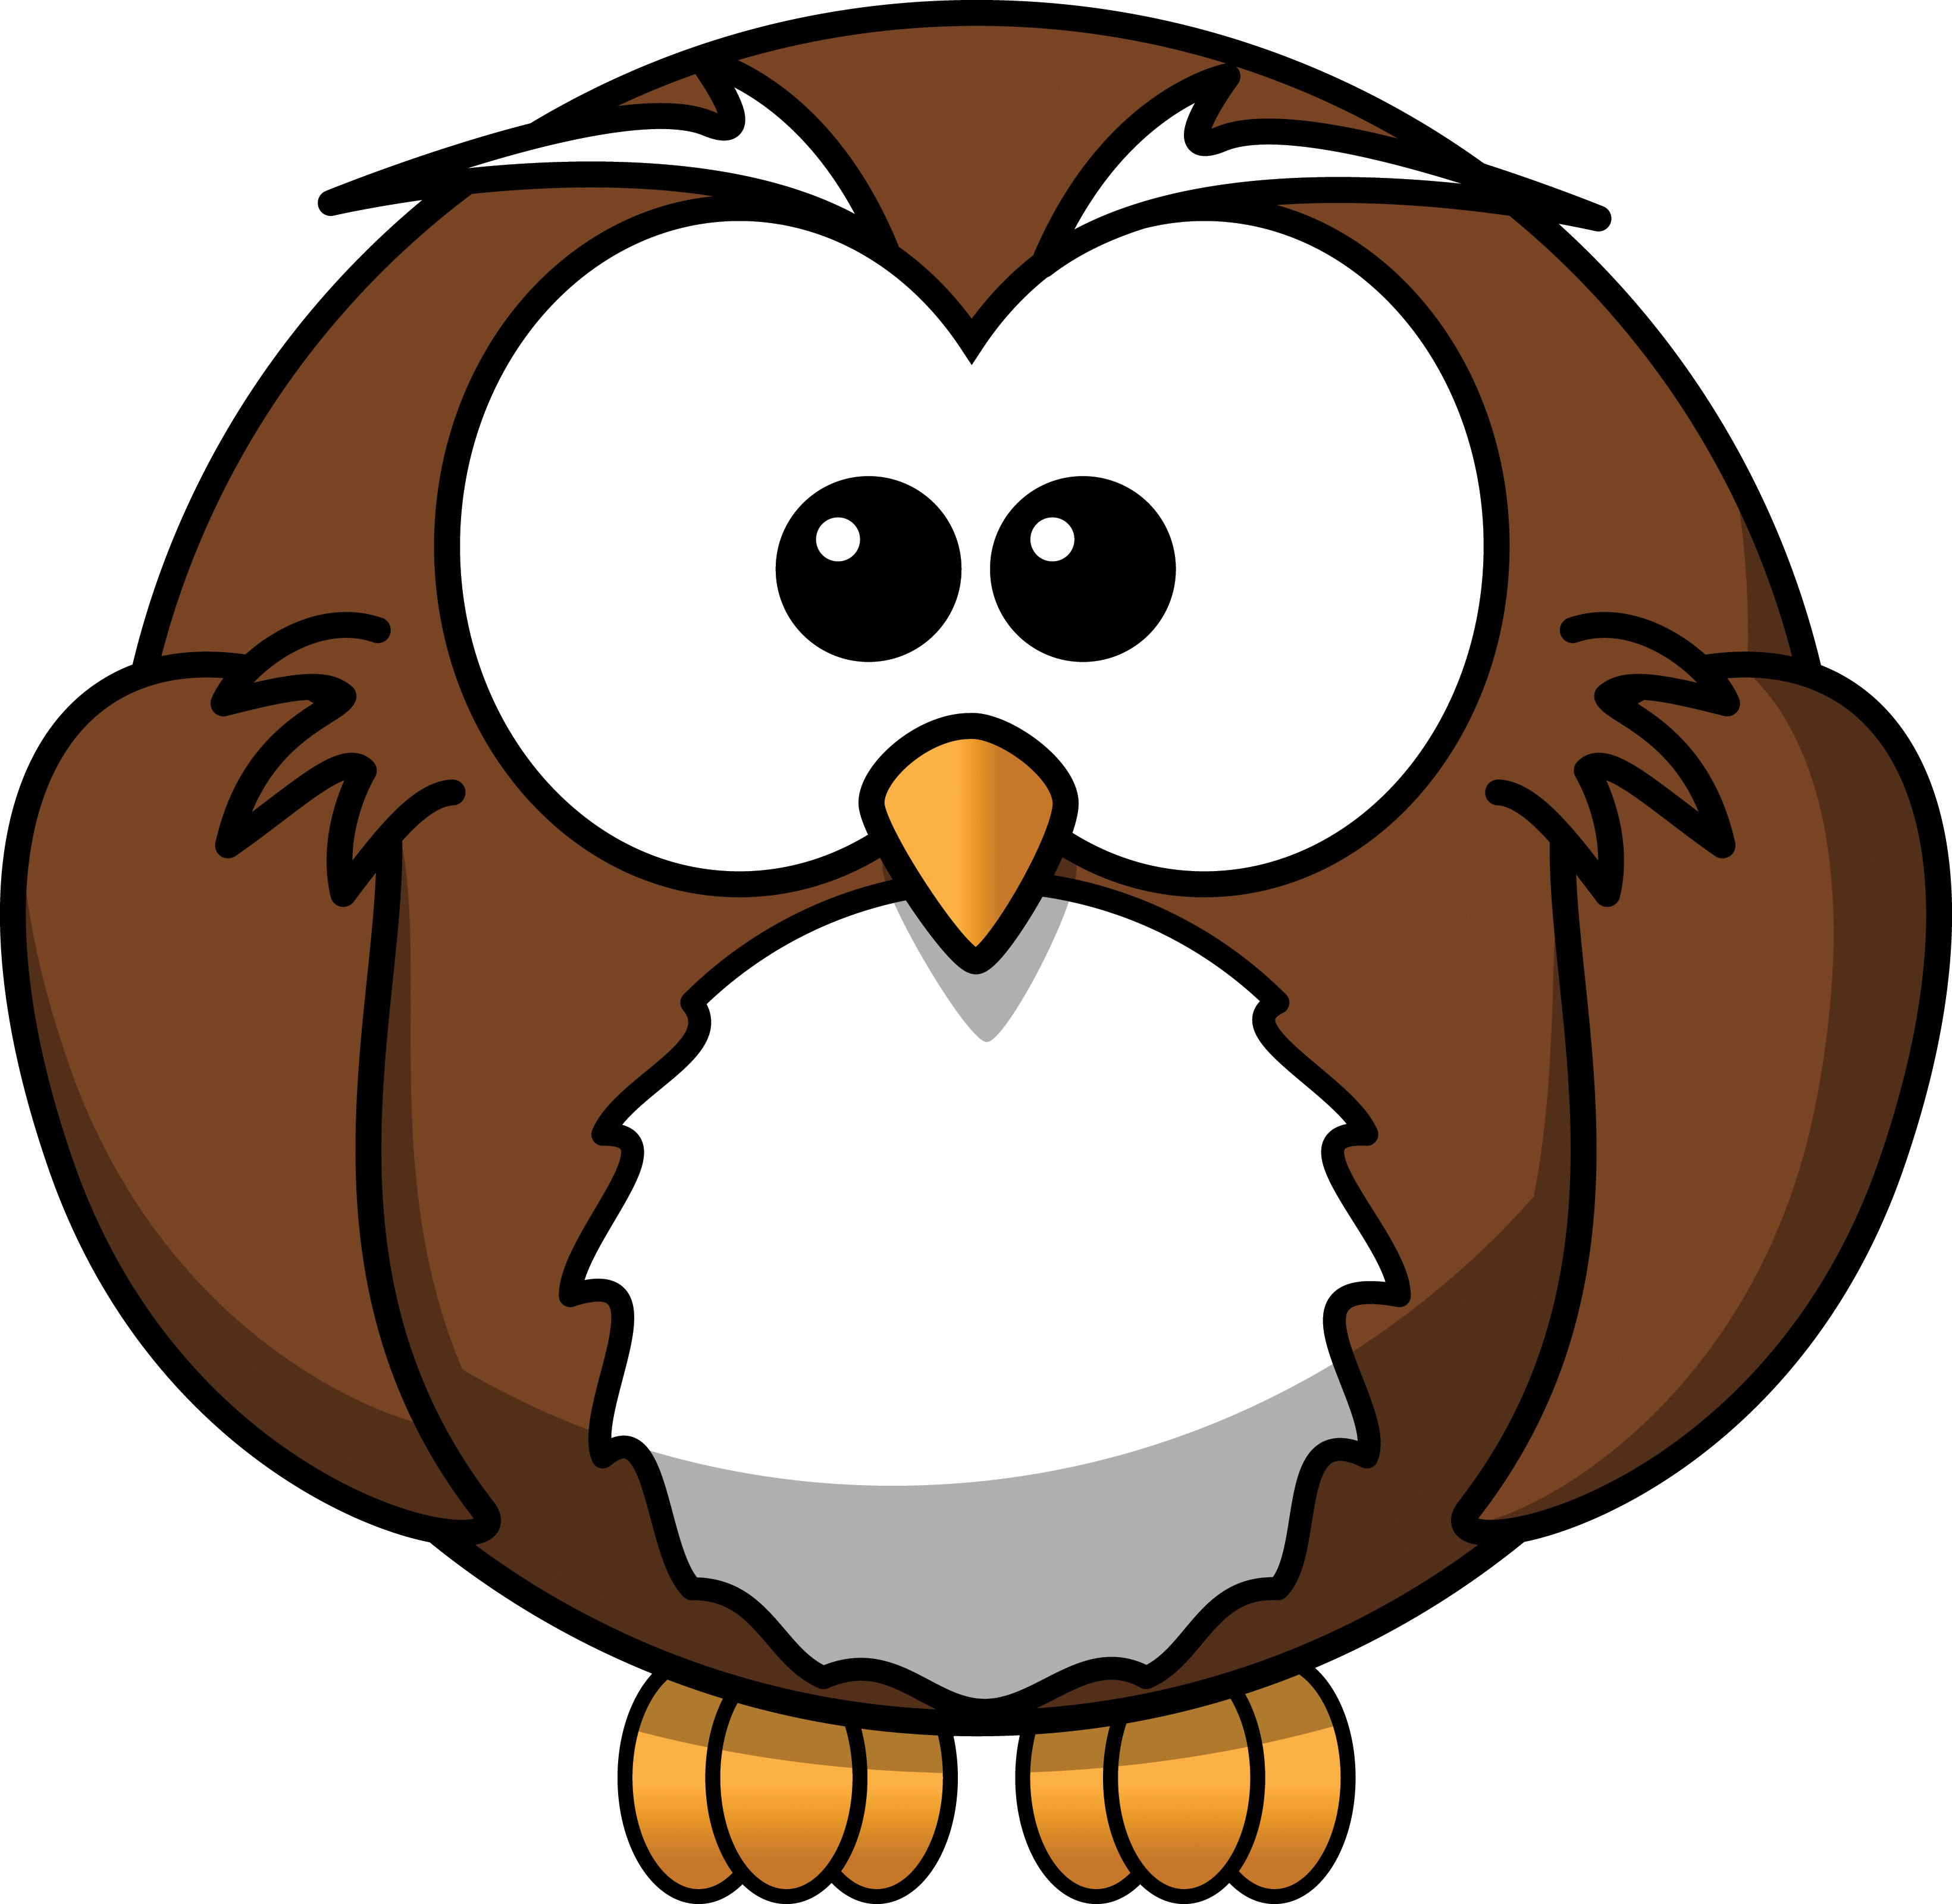 Clip art of owl